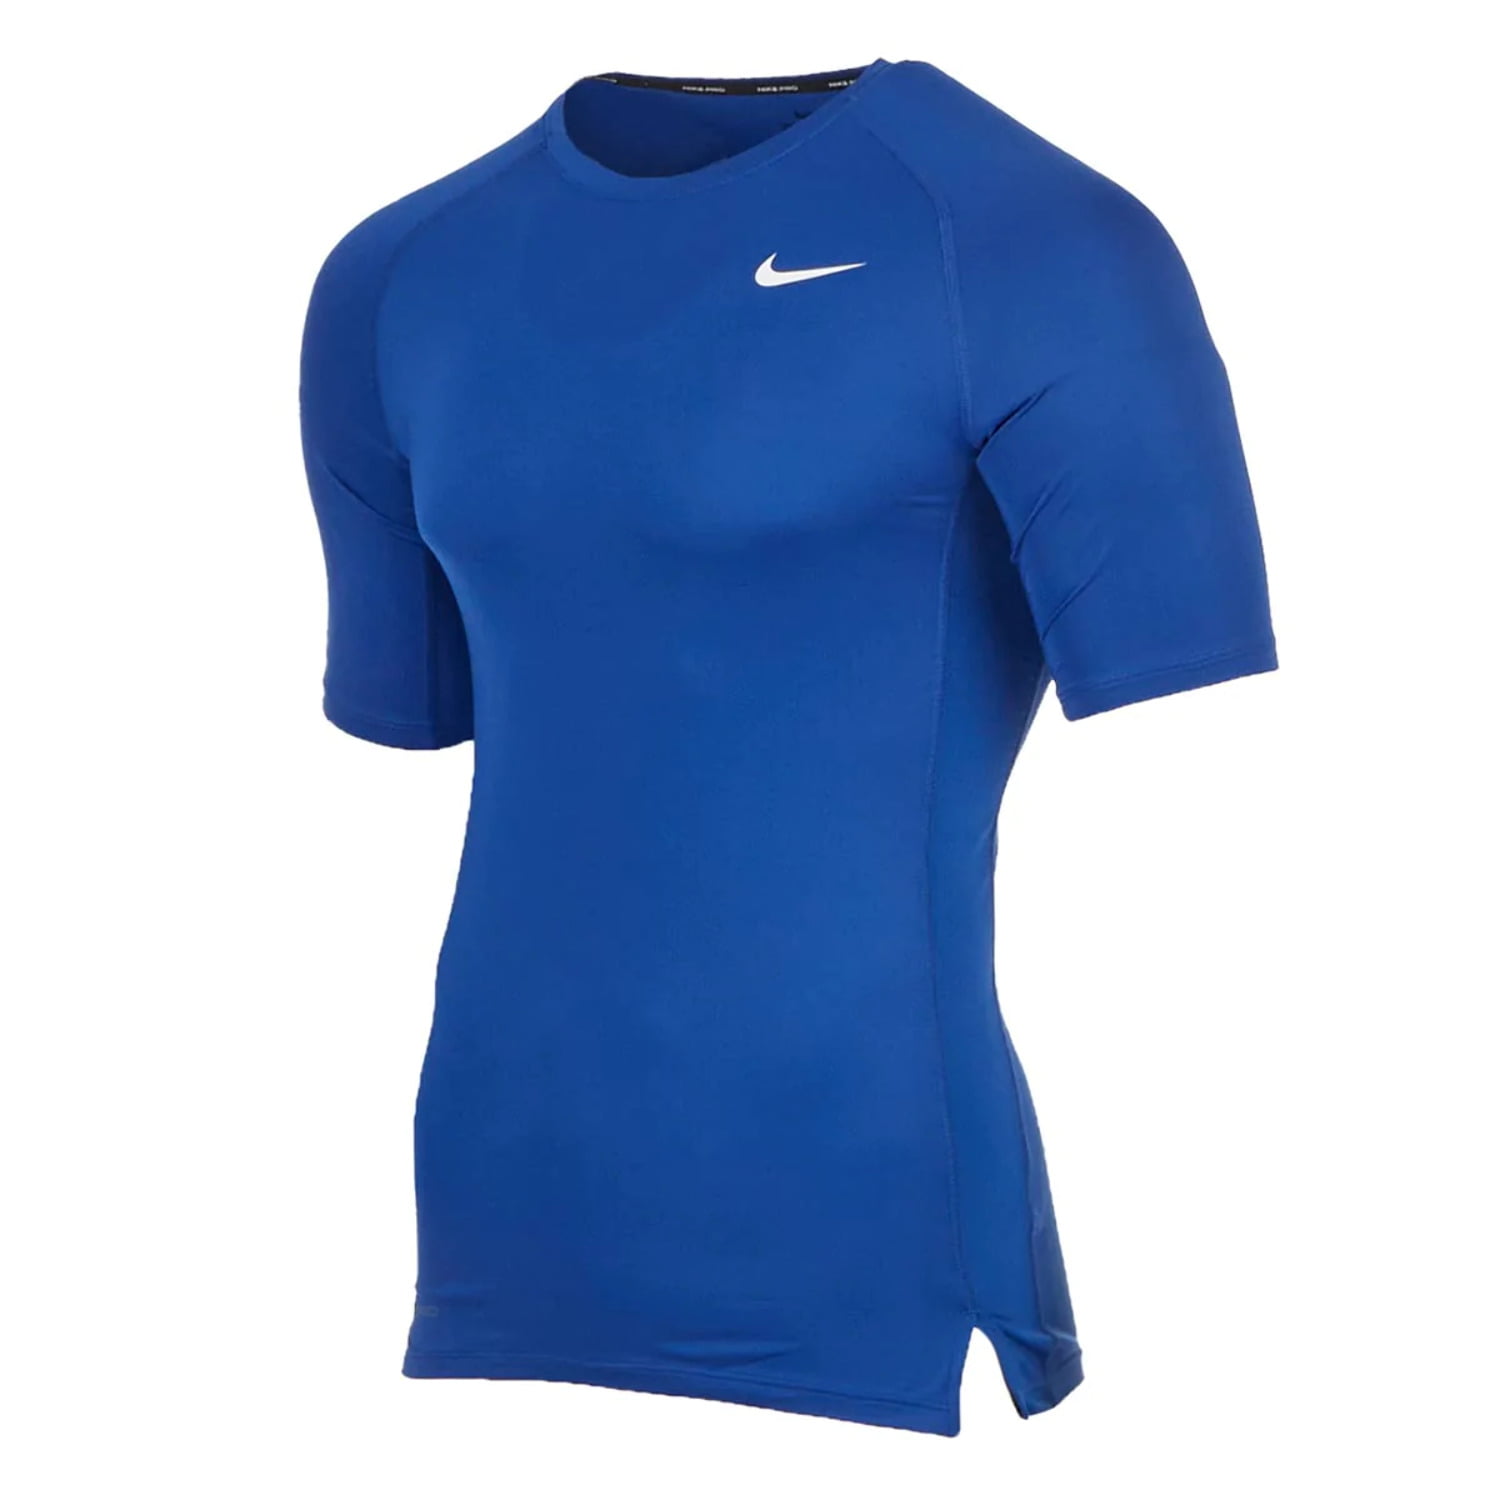 Nike Men's Pro Compression Short Sleeve Tagless Shirt CJ0965